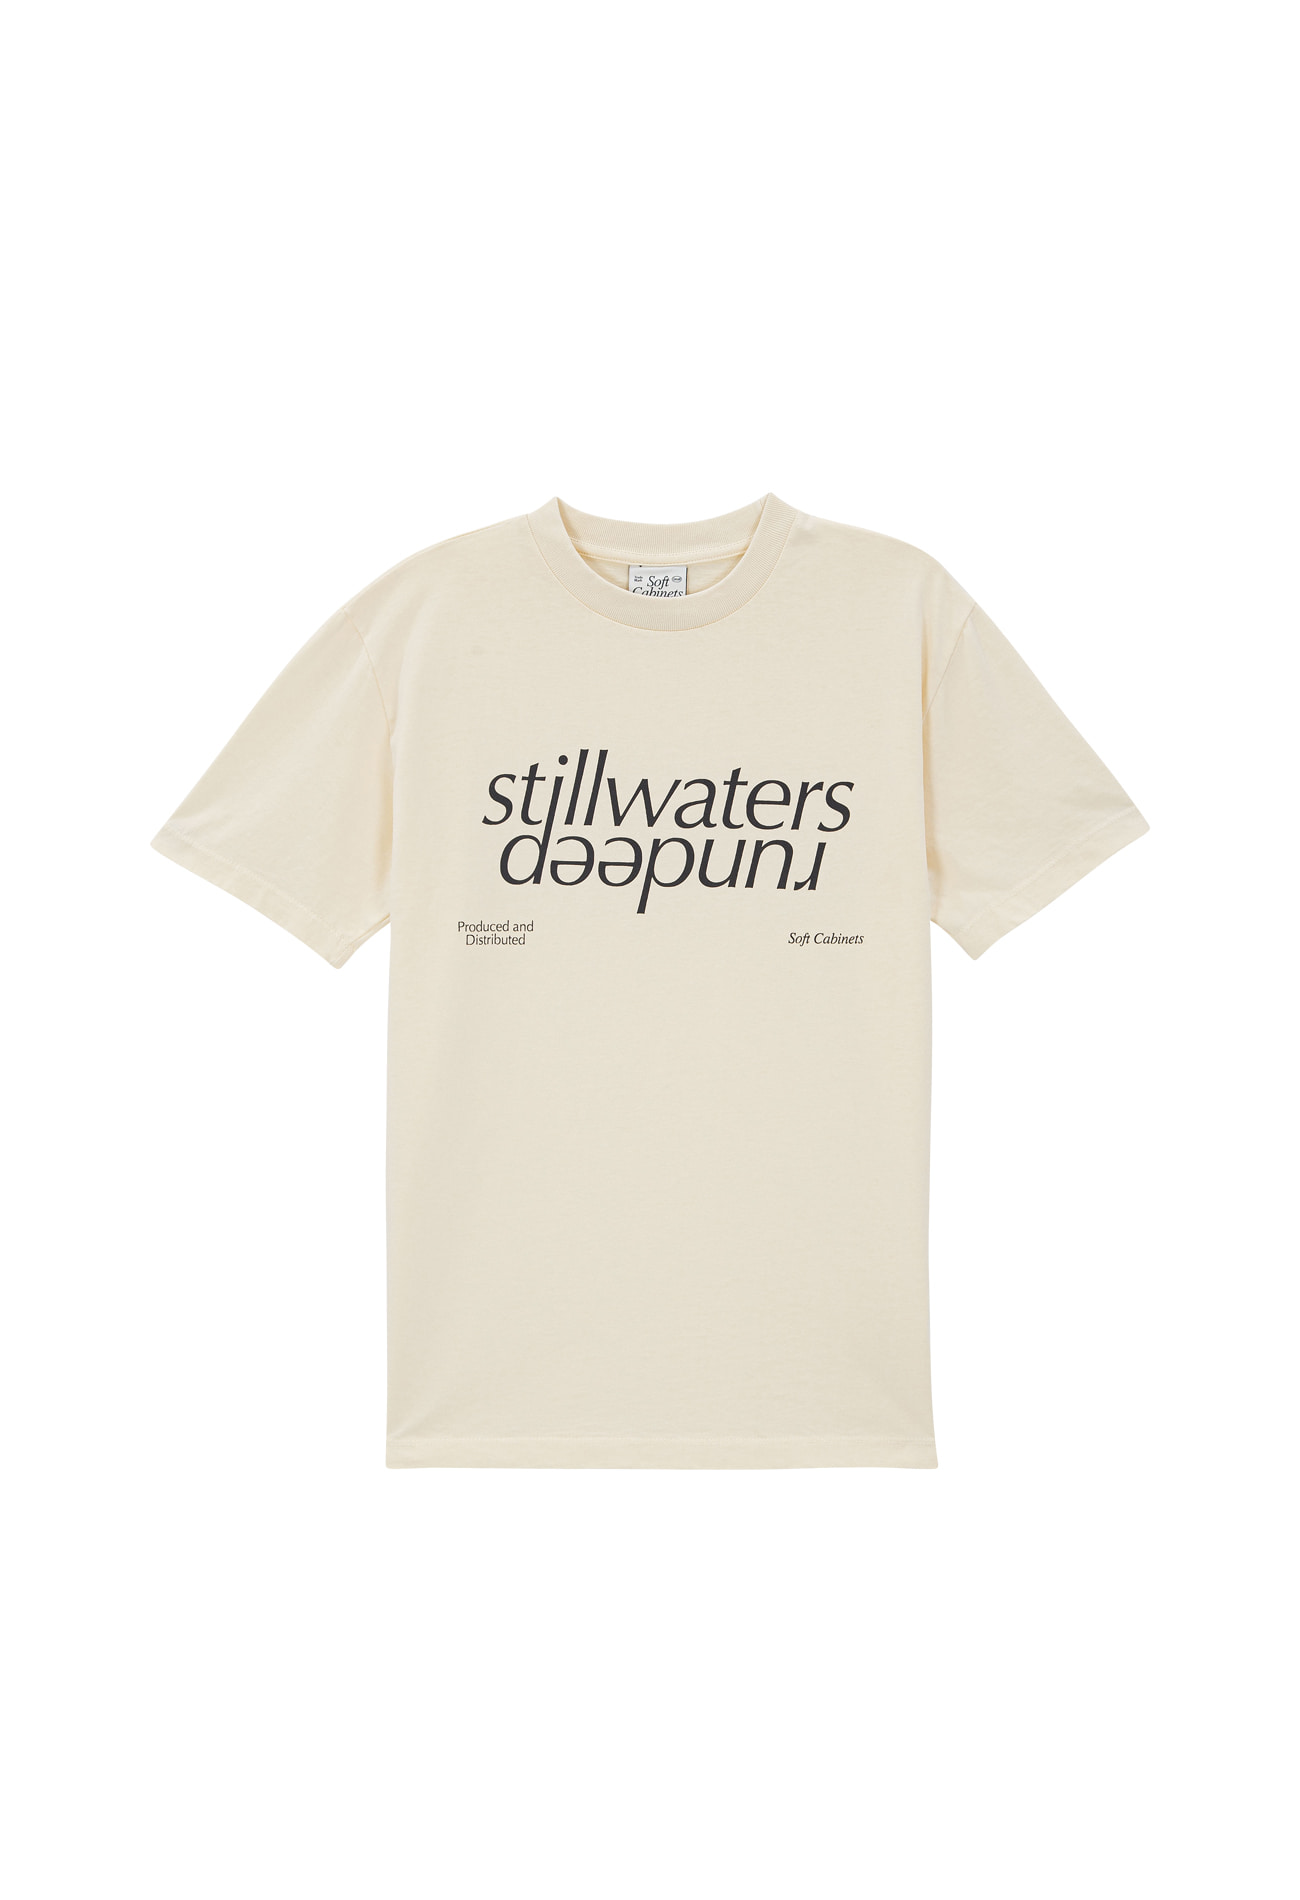 Stillwaters T-shirt Yellow